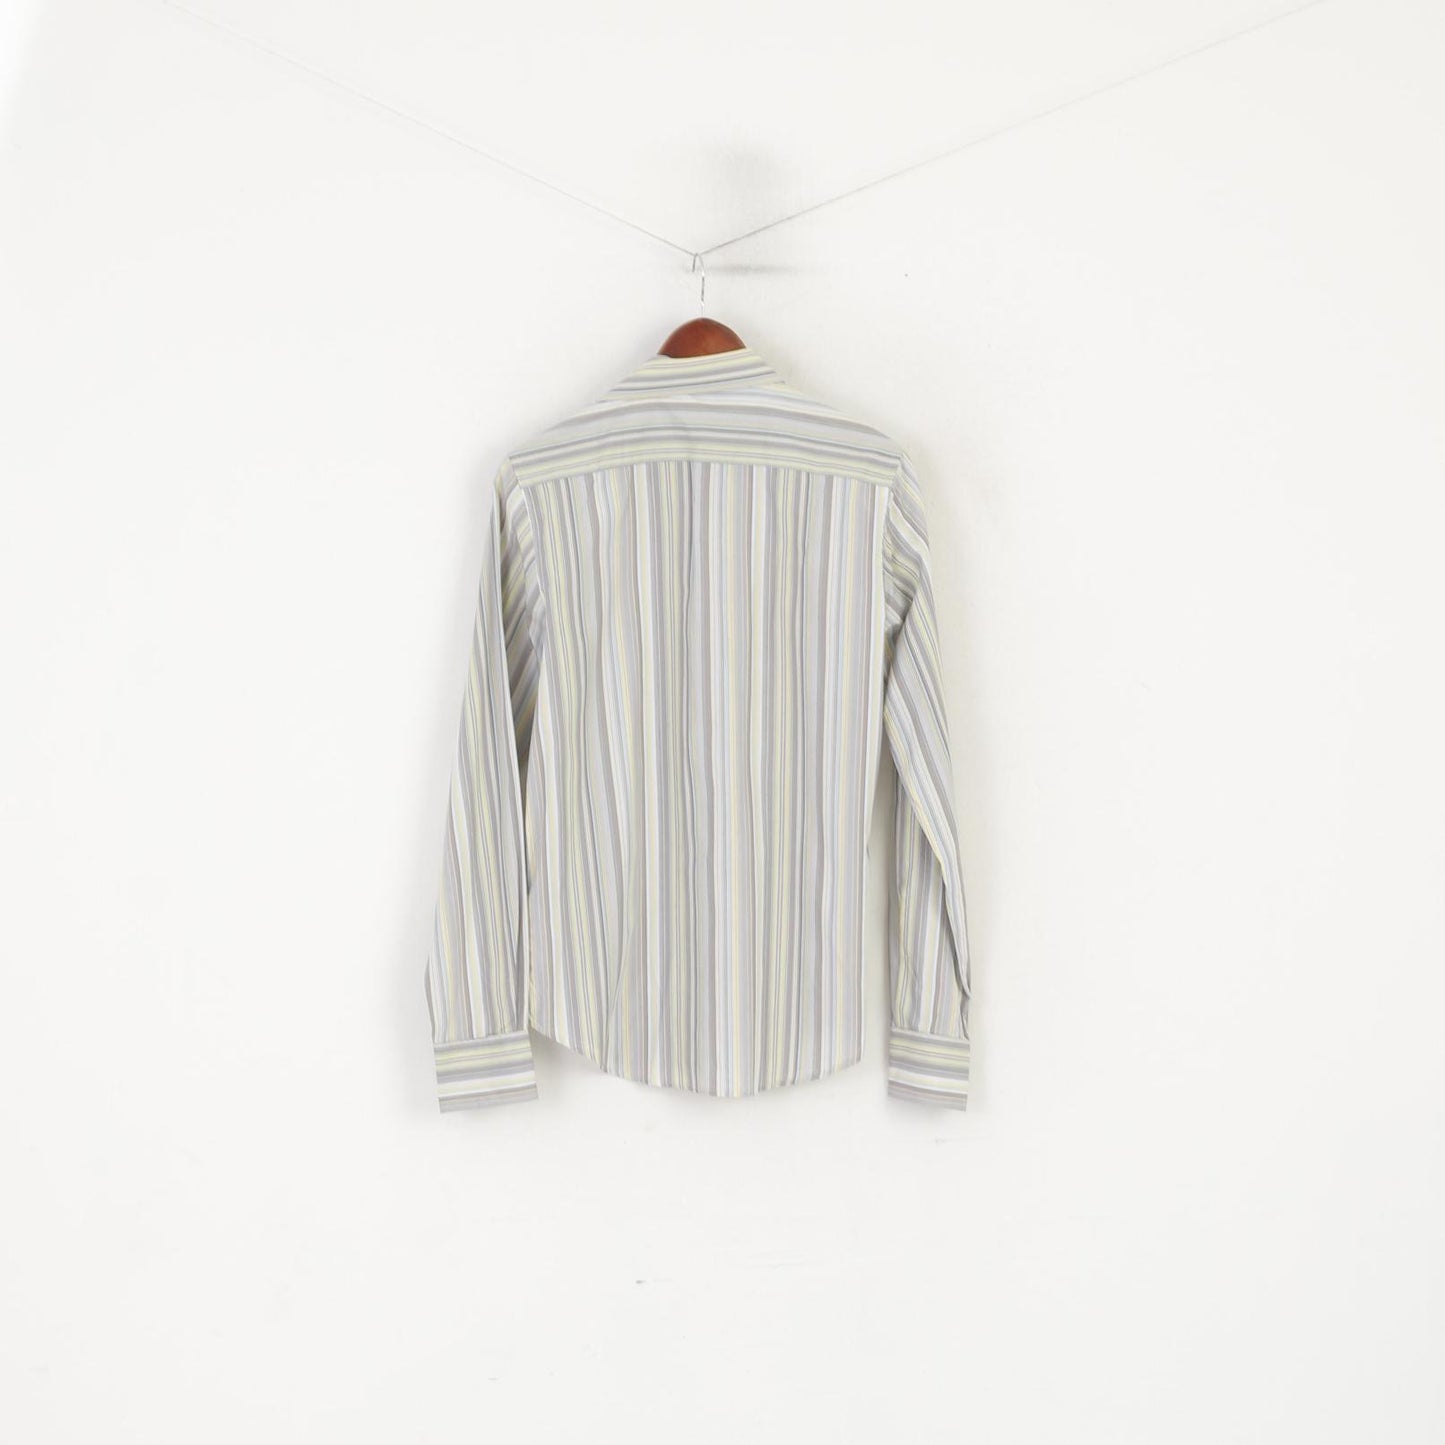 New Ben Sherman Men S Casual Shirt Grey Striped Cotton Long Sleeve Slim Fit To